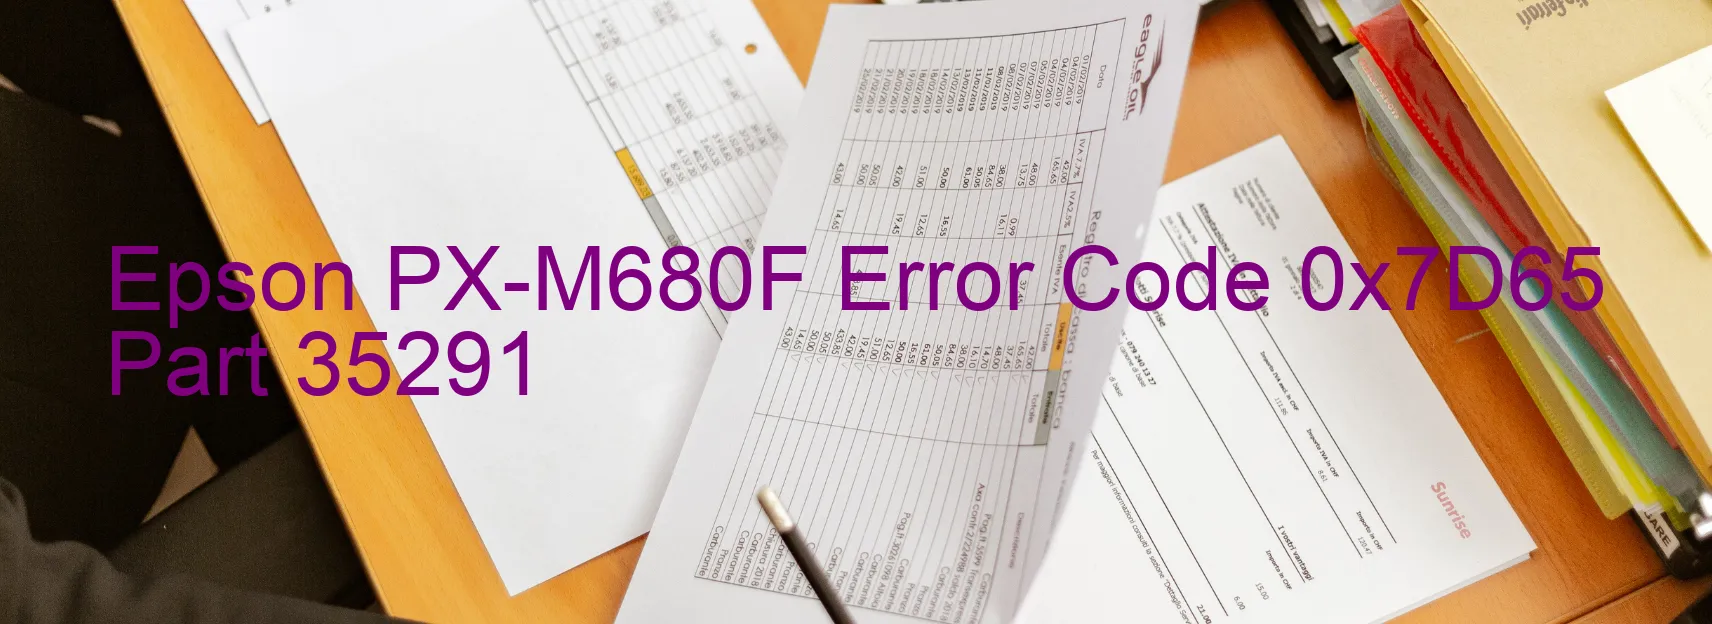 Epson PX-M680F Error Code 0x7D65 Part 35291